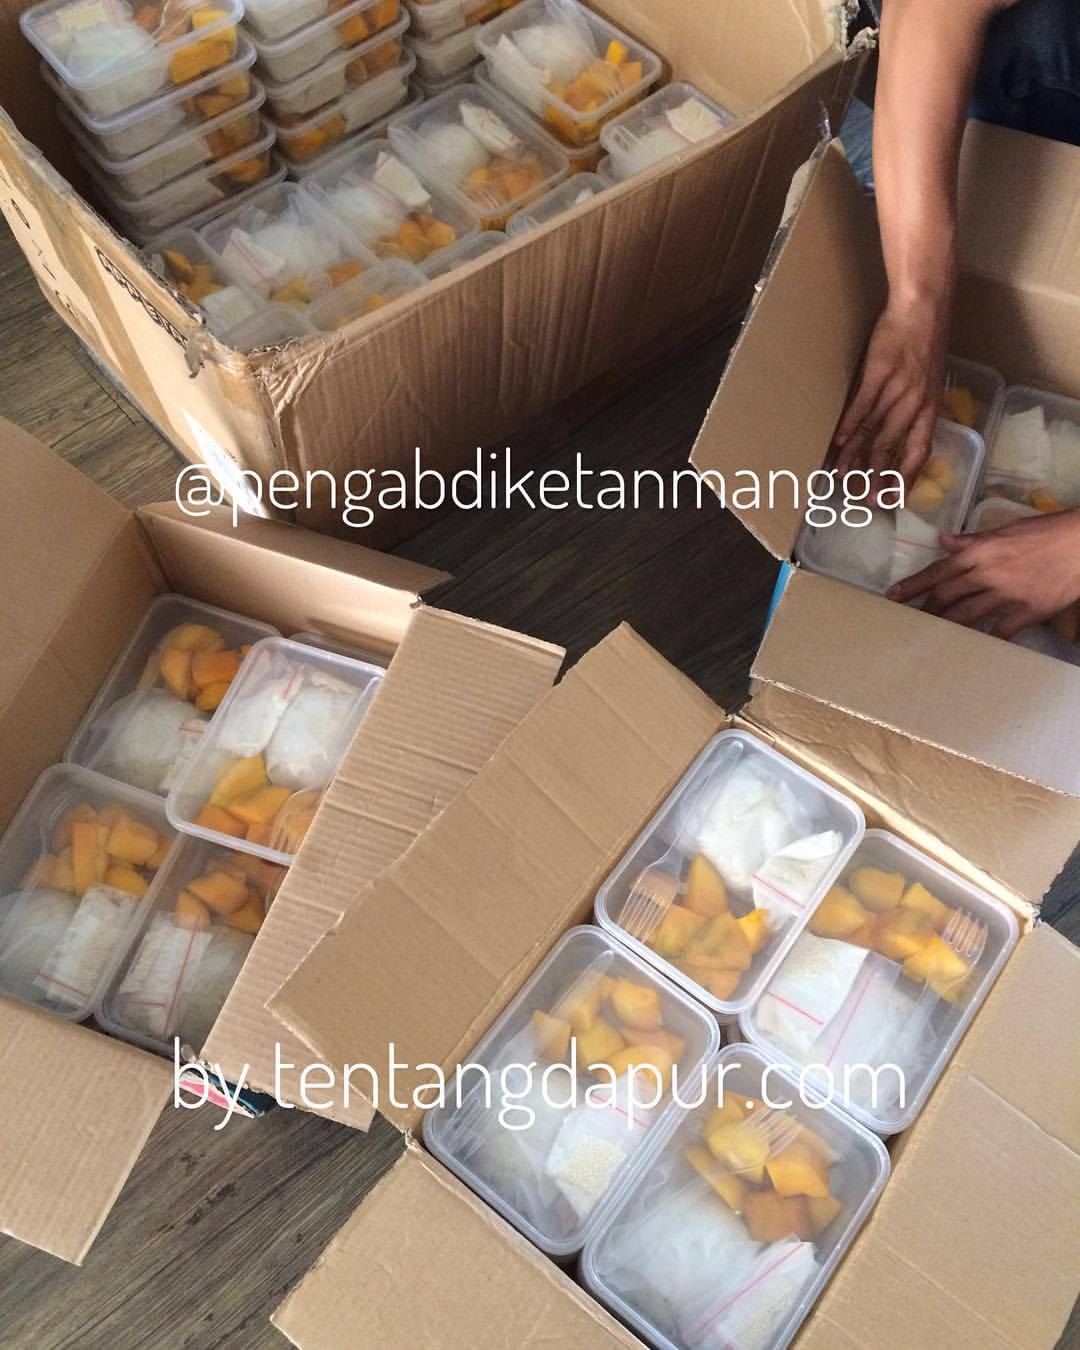 Penjual Ketan Mangga Paling Enak di Jakarta